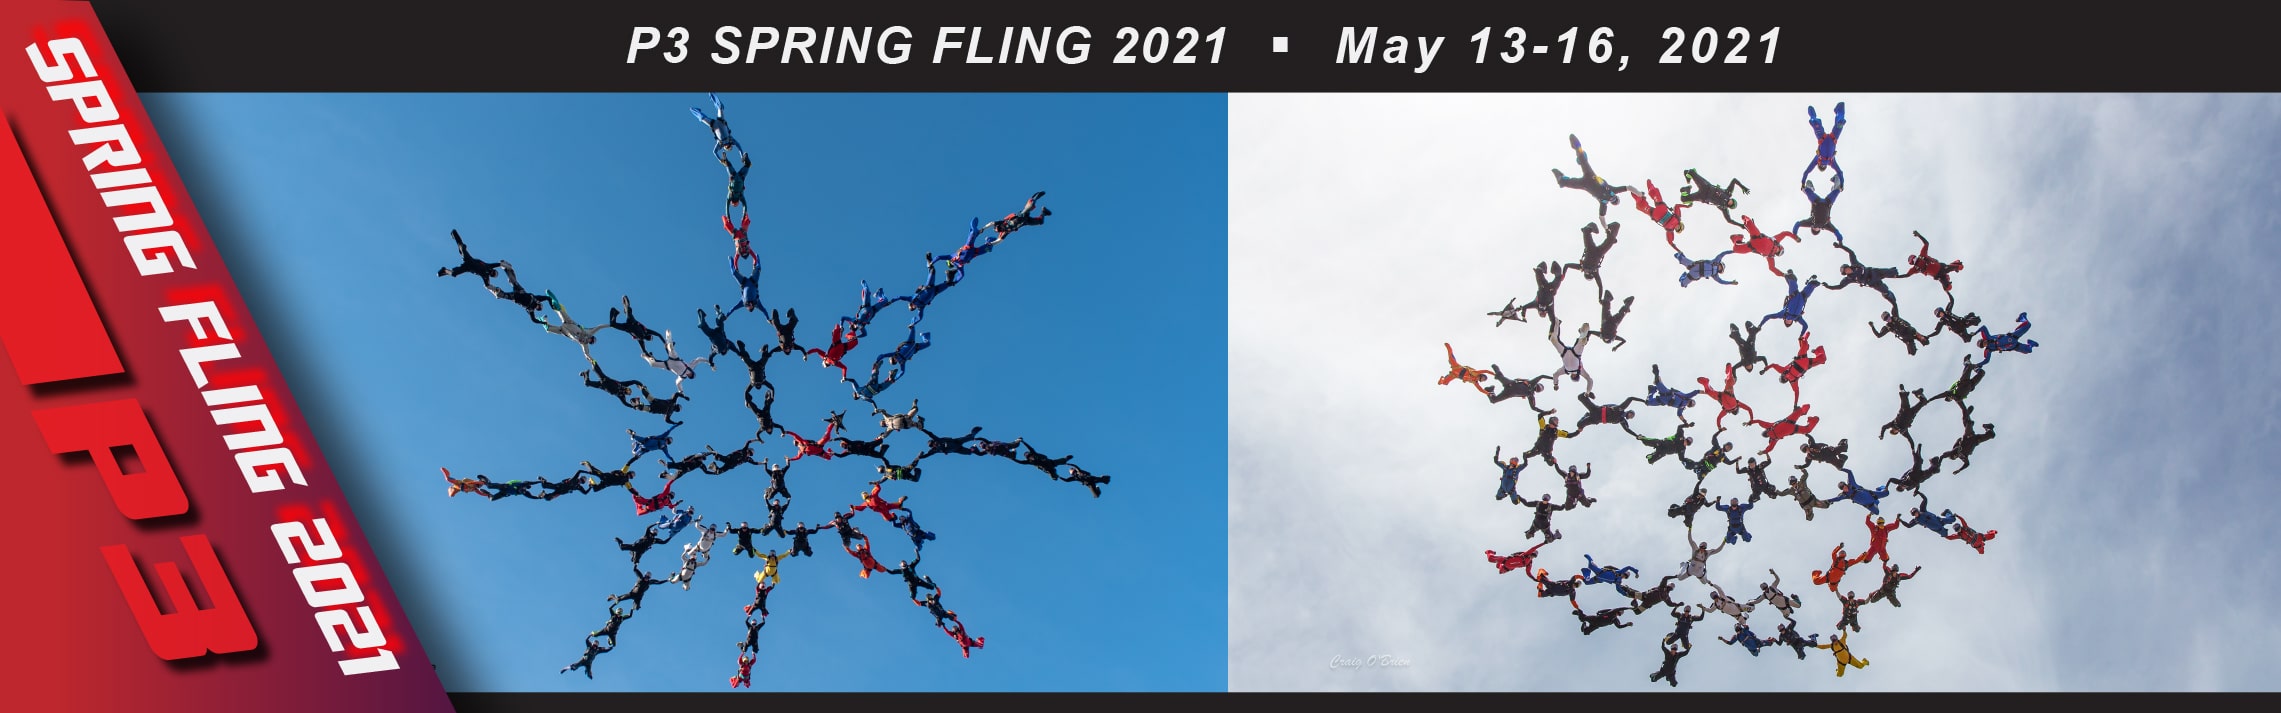 Spring Fling 2021